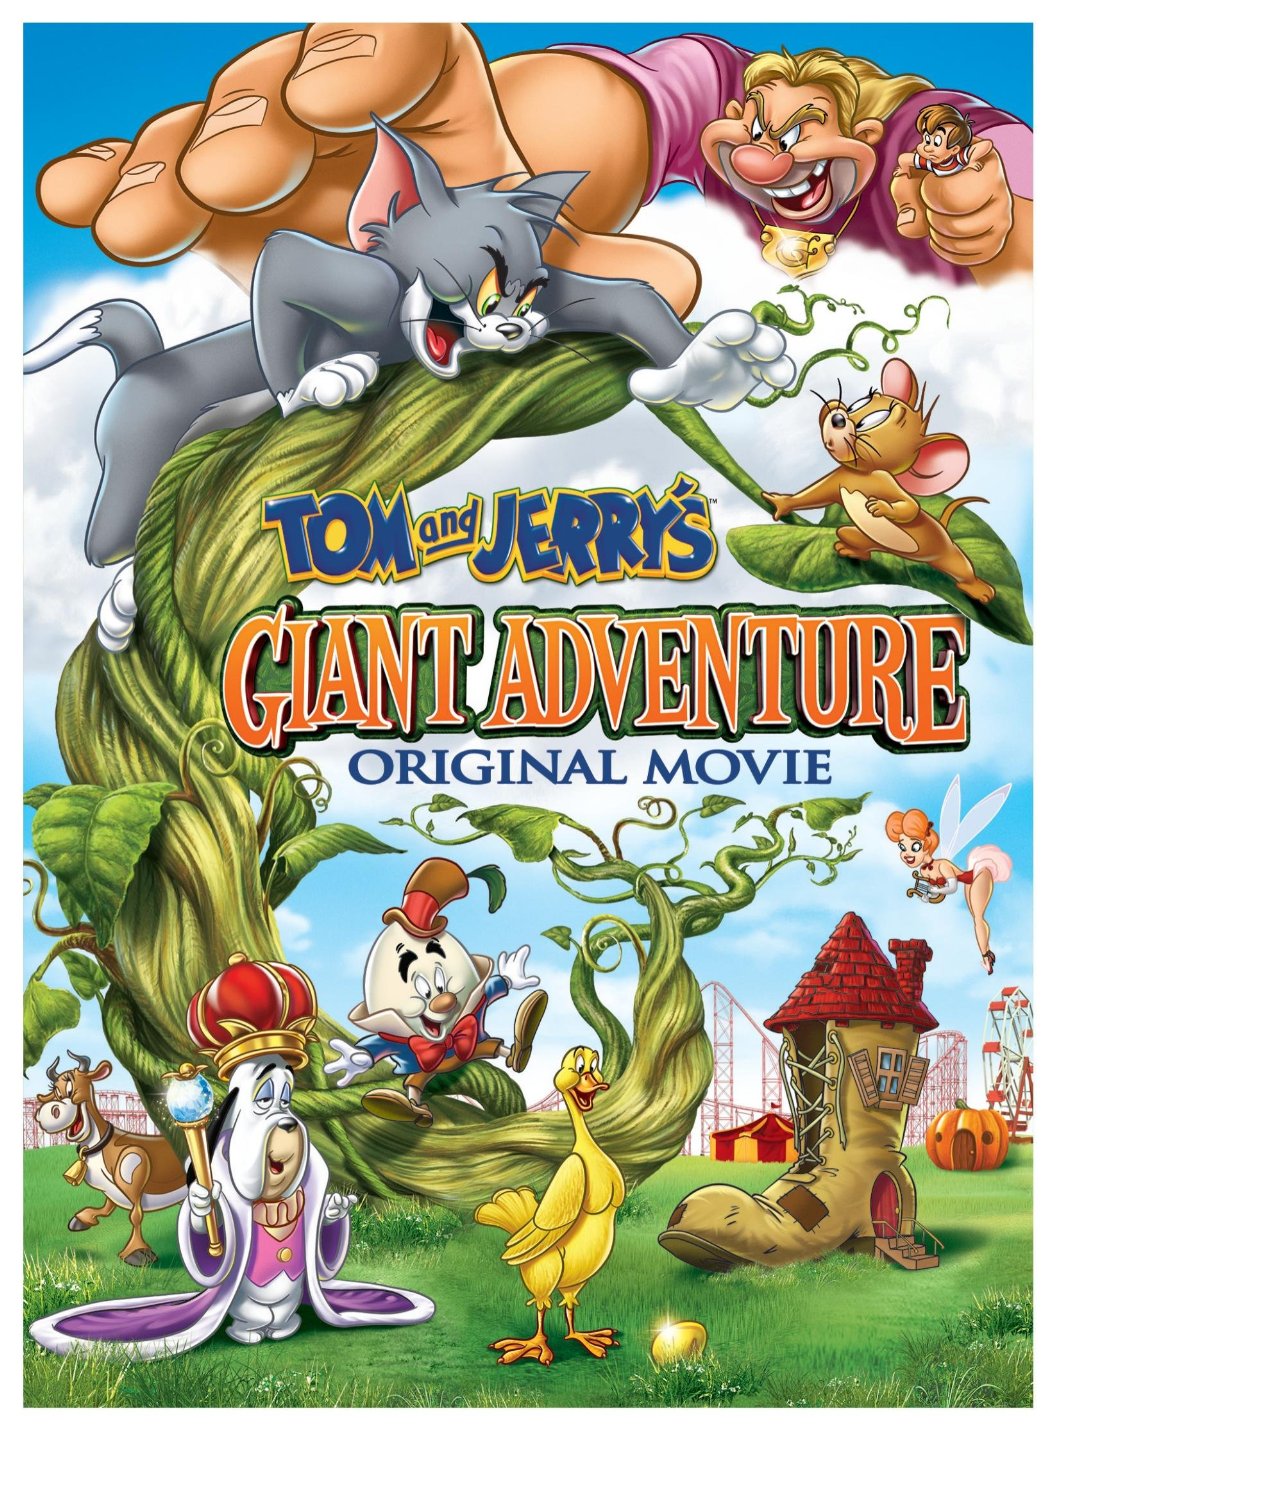 Tom and Jerry’s Giant Adventure Original Movie!